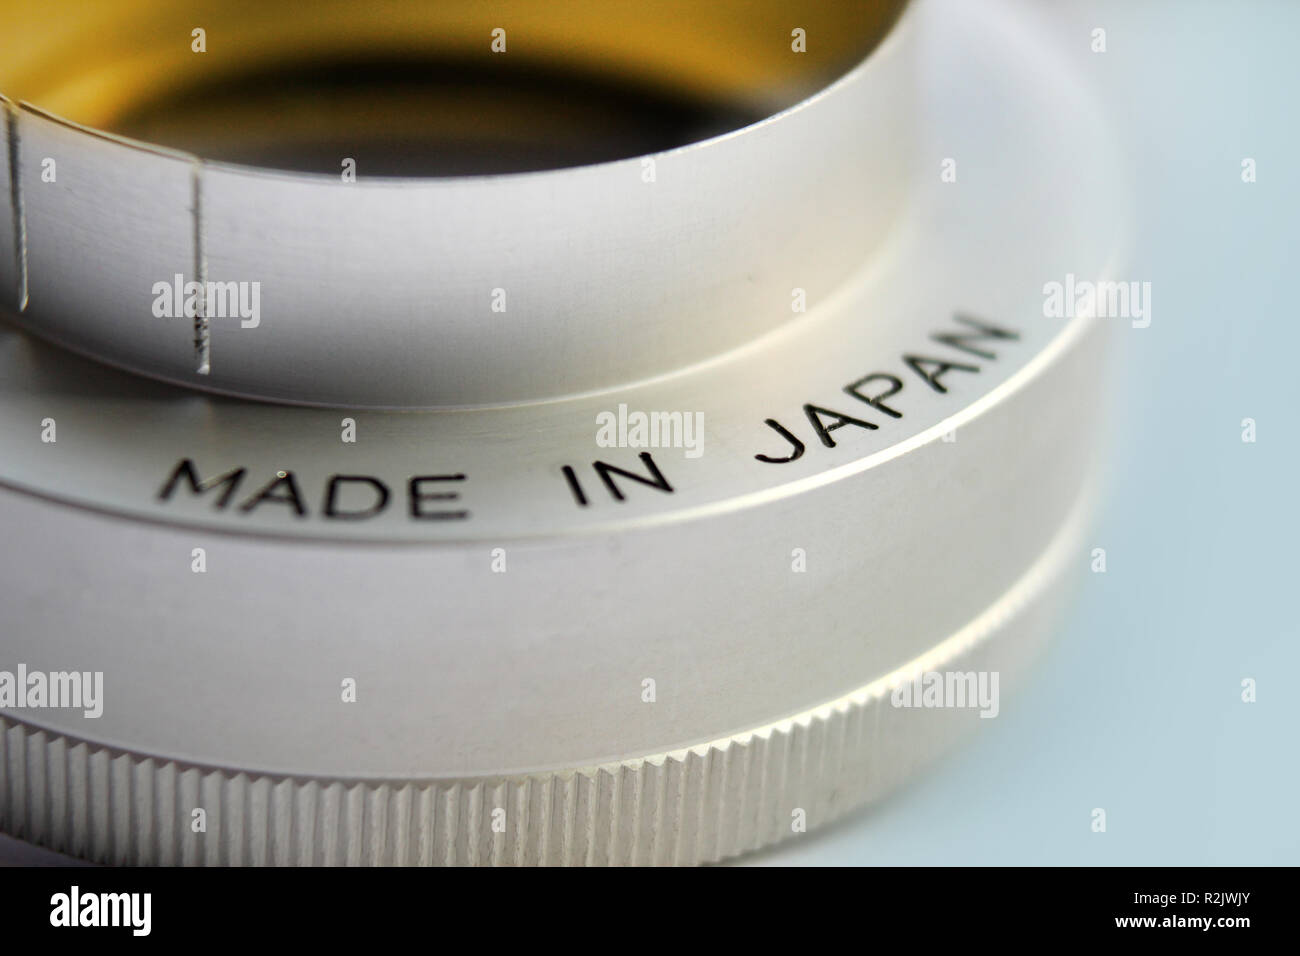 Polaroid Linse in Japan gemacht, close-up Stockfotografie - Alamy